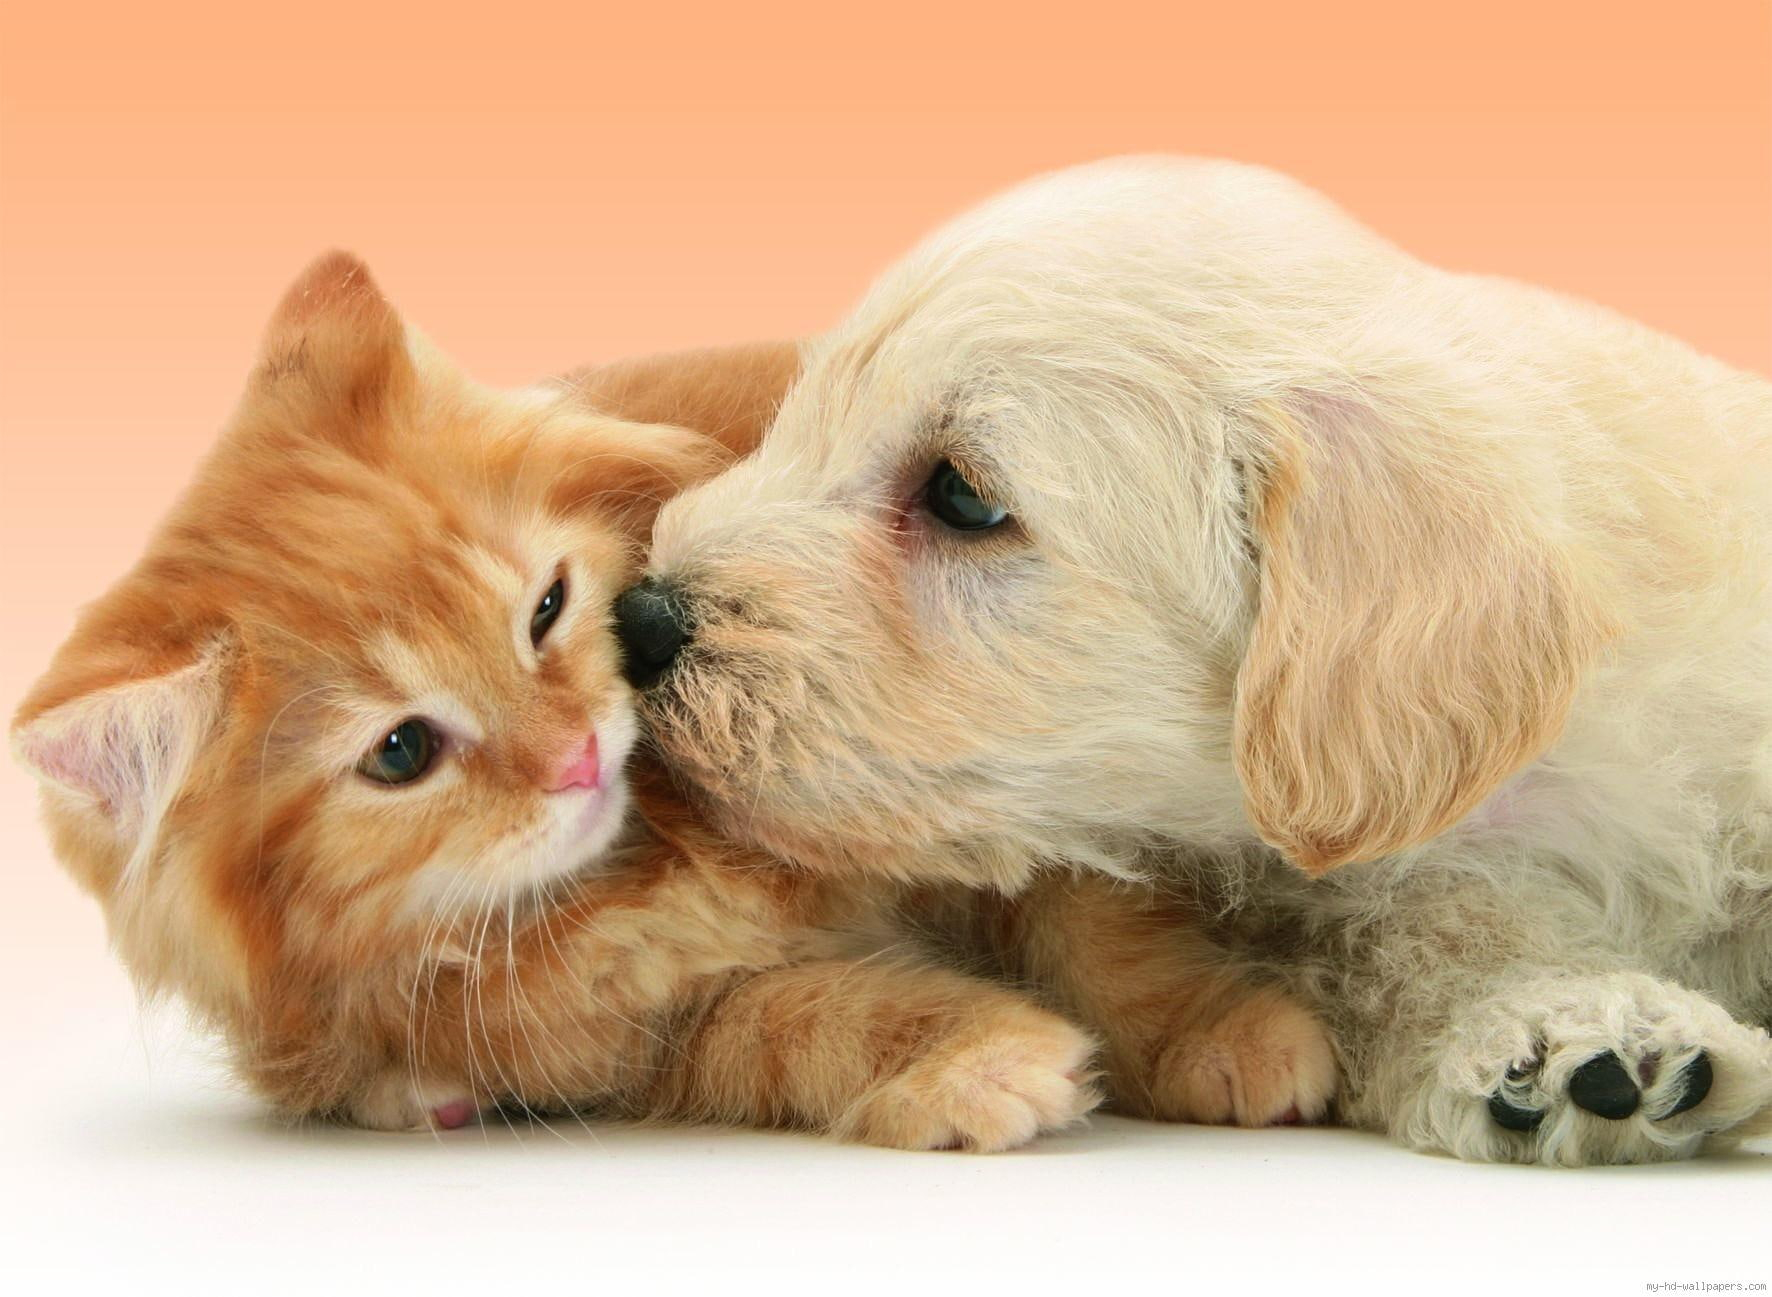 Puppy Dog kissing cat, cat and dog wallpaper, animal, fun